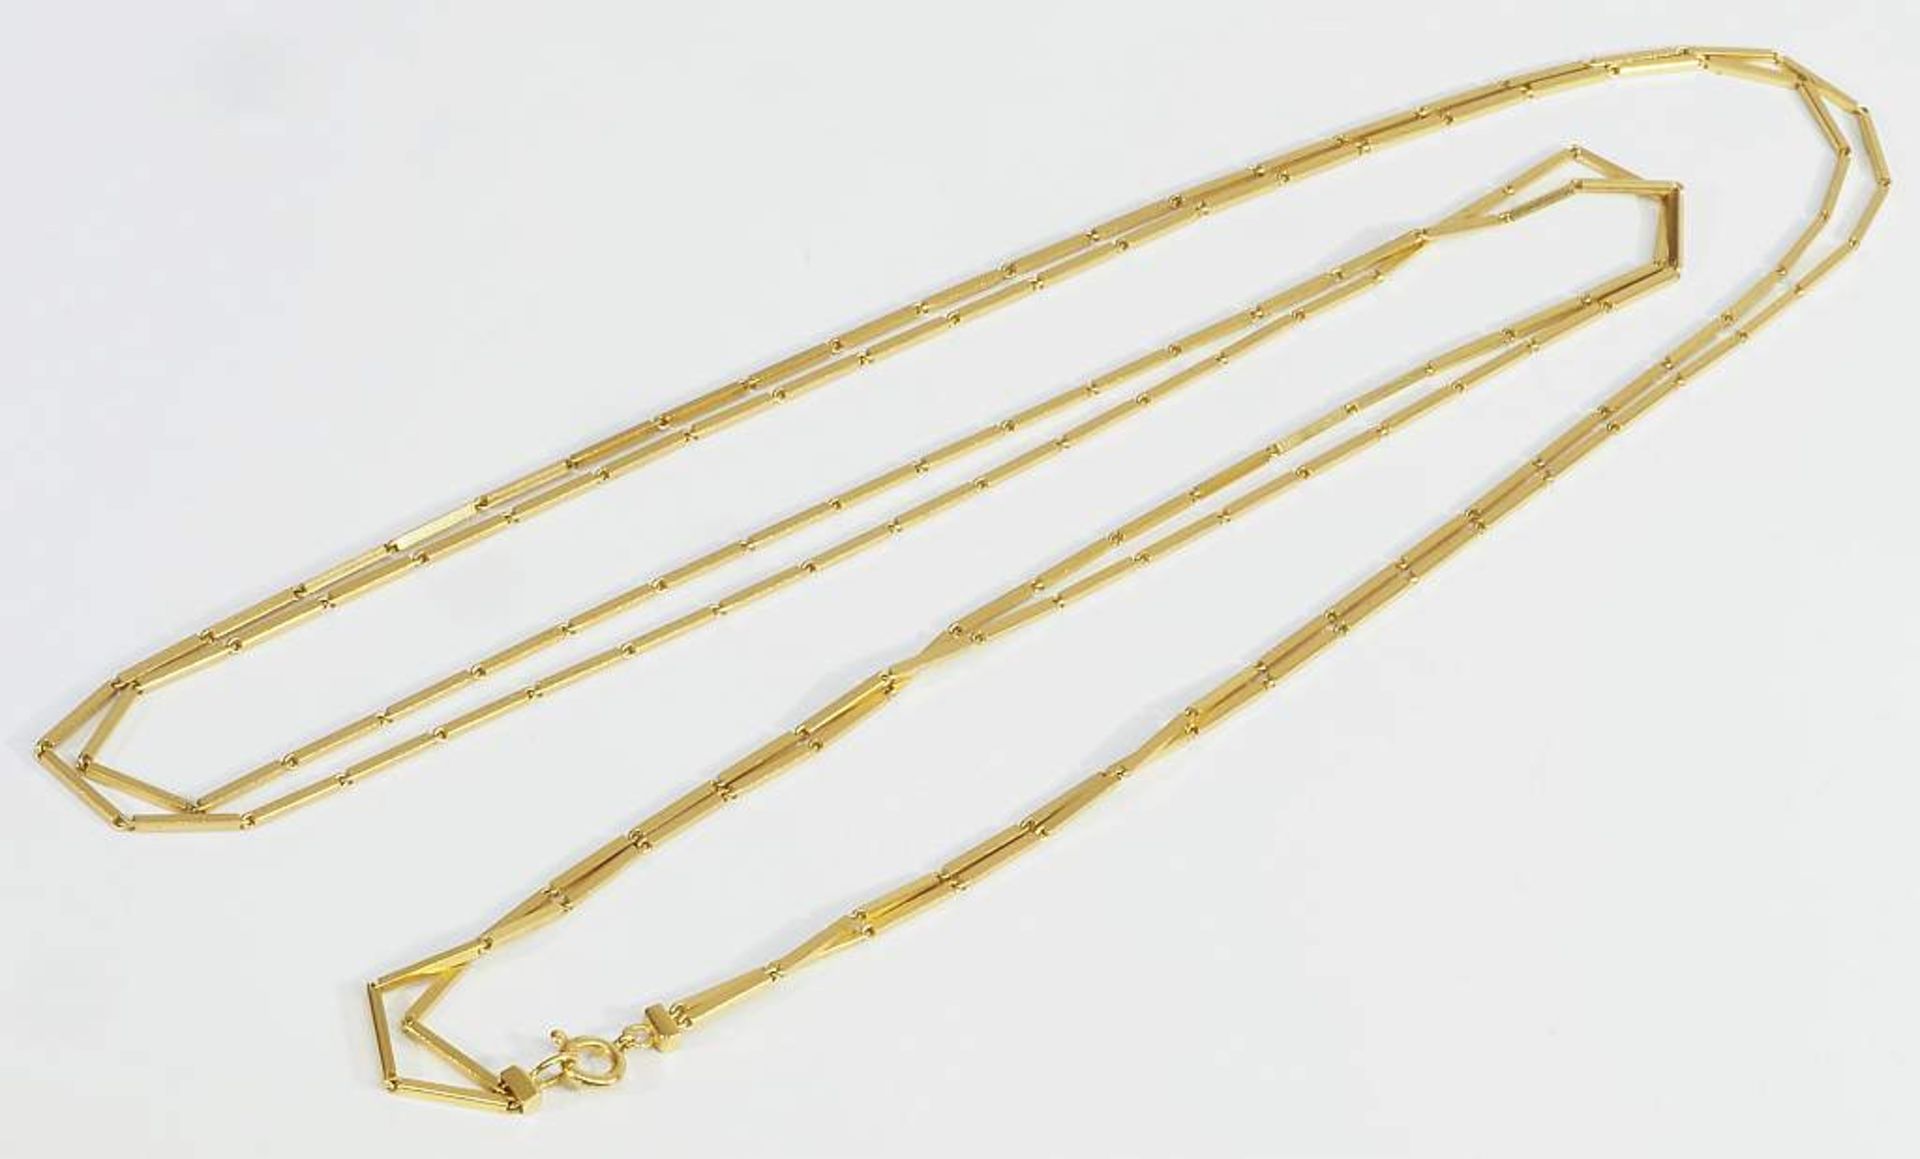 Zweireihige Stabkette.Zweireihige Stabkette mit Ringösenverschluß. 750er Gelbgold, Länge ca. 78 - Image 4 of 5